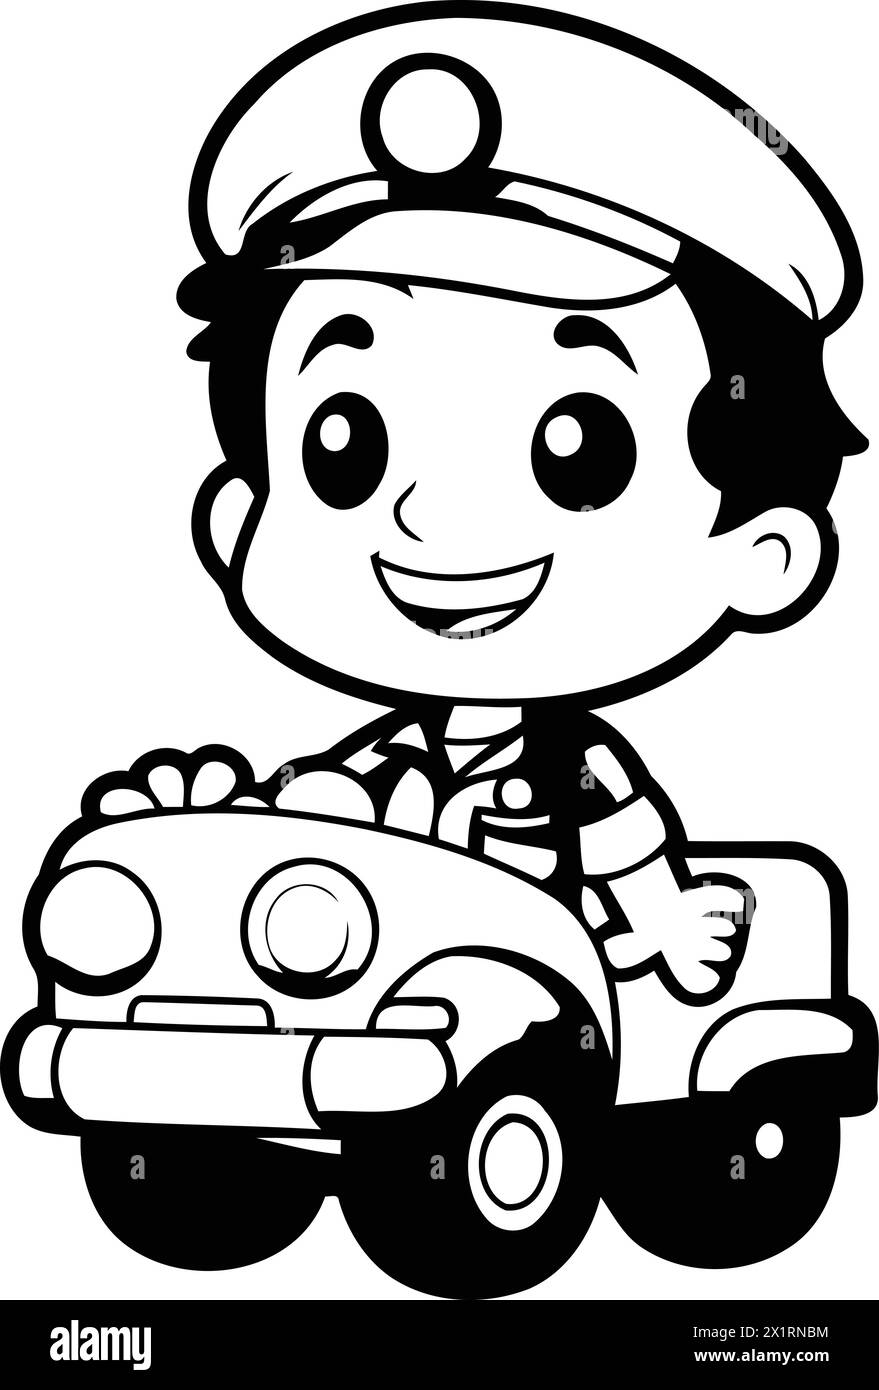 Cute cartoon police officer with a toy car. Vector illustration. Stock Vector